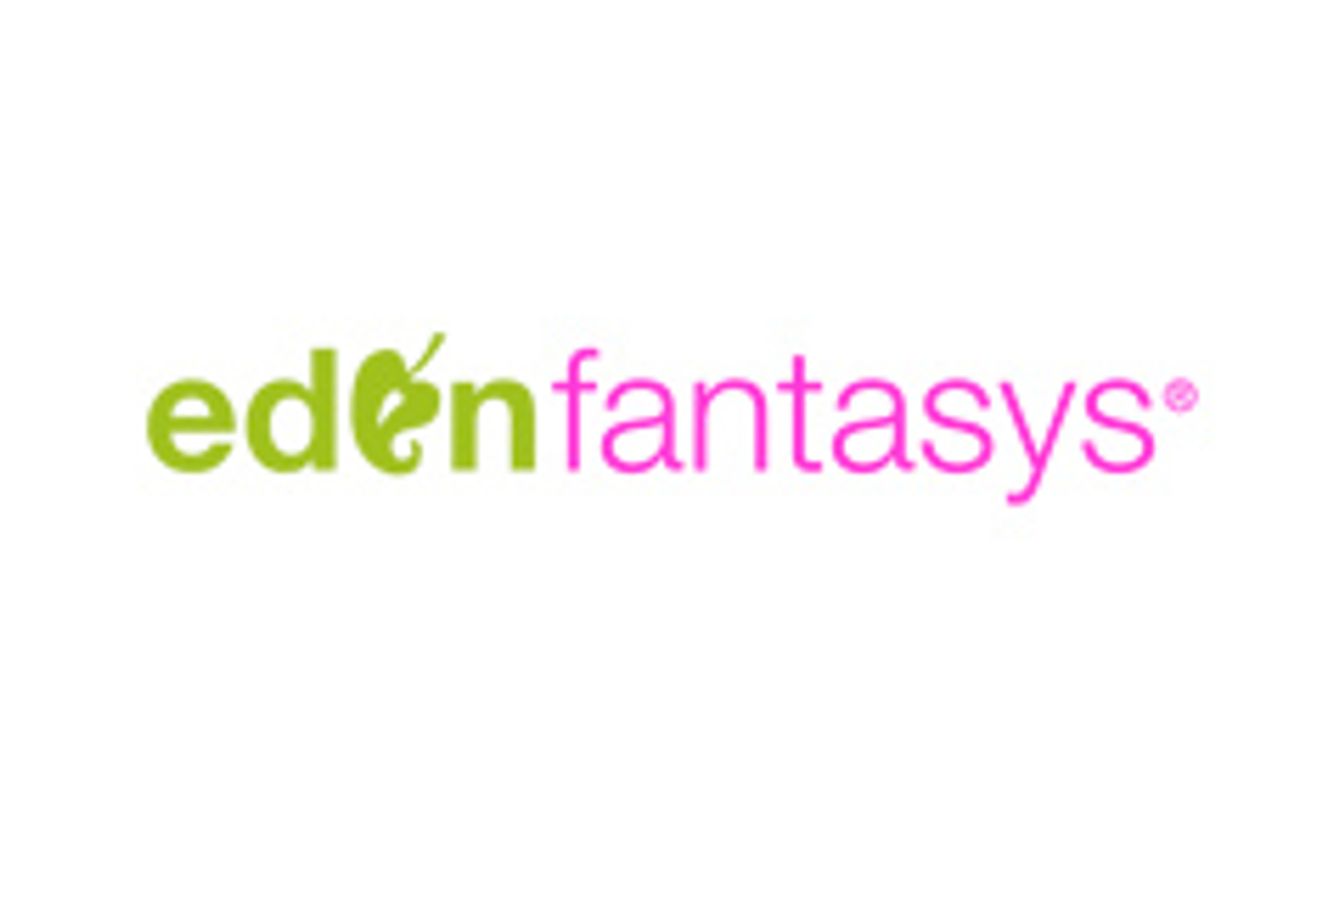 Eden Fantasys